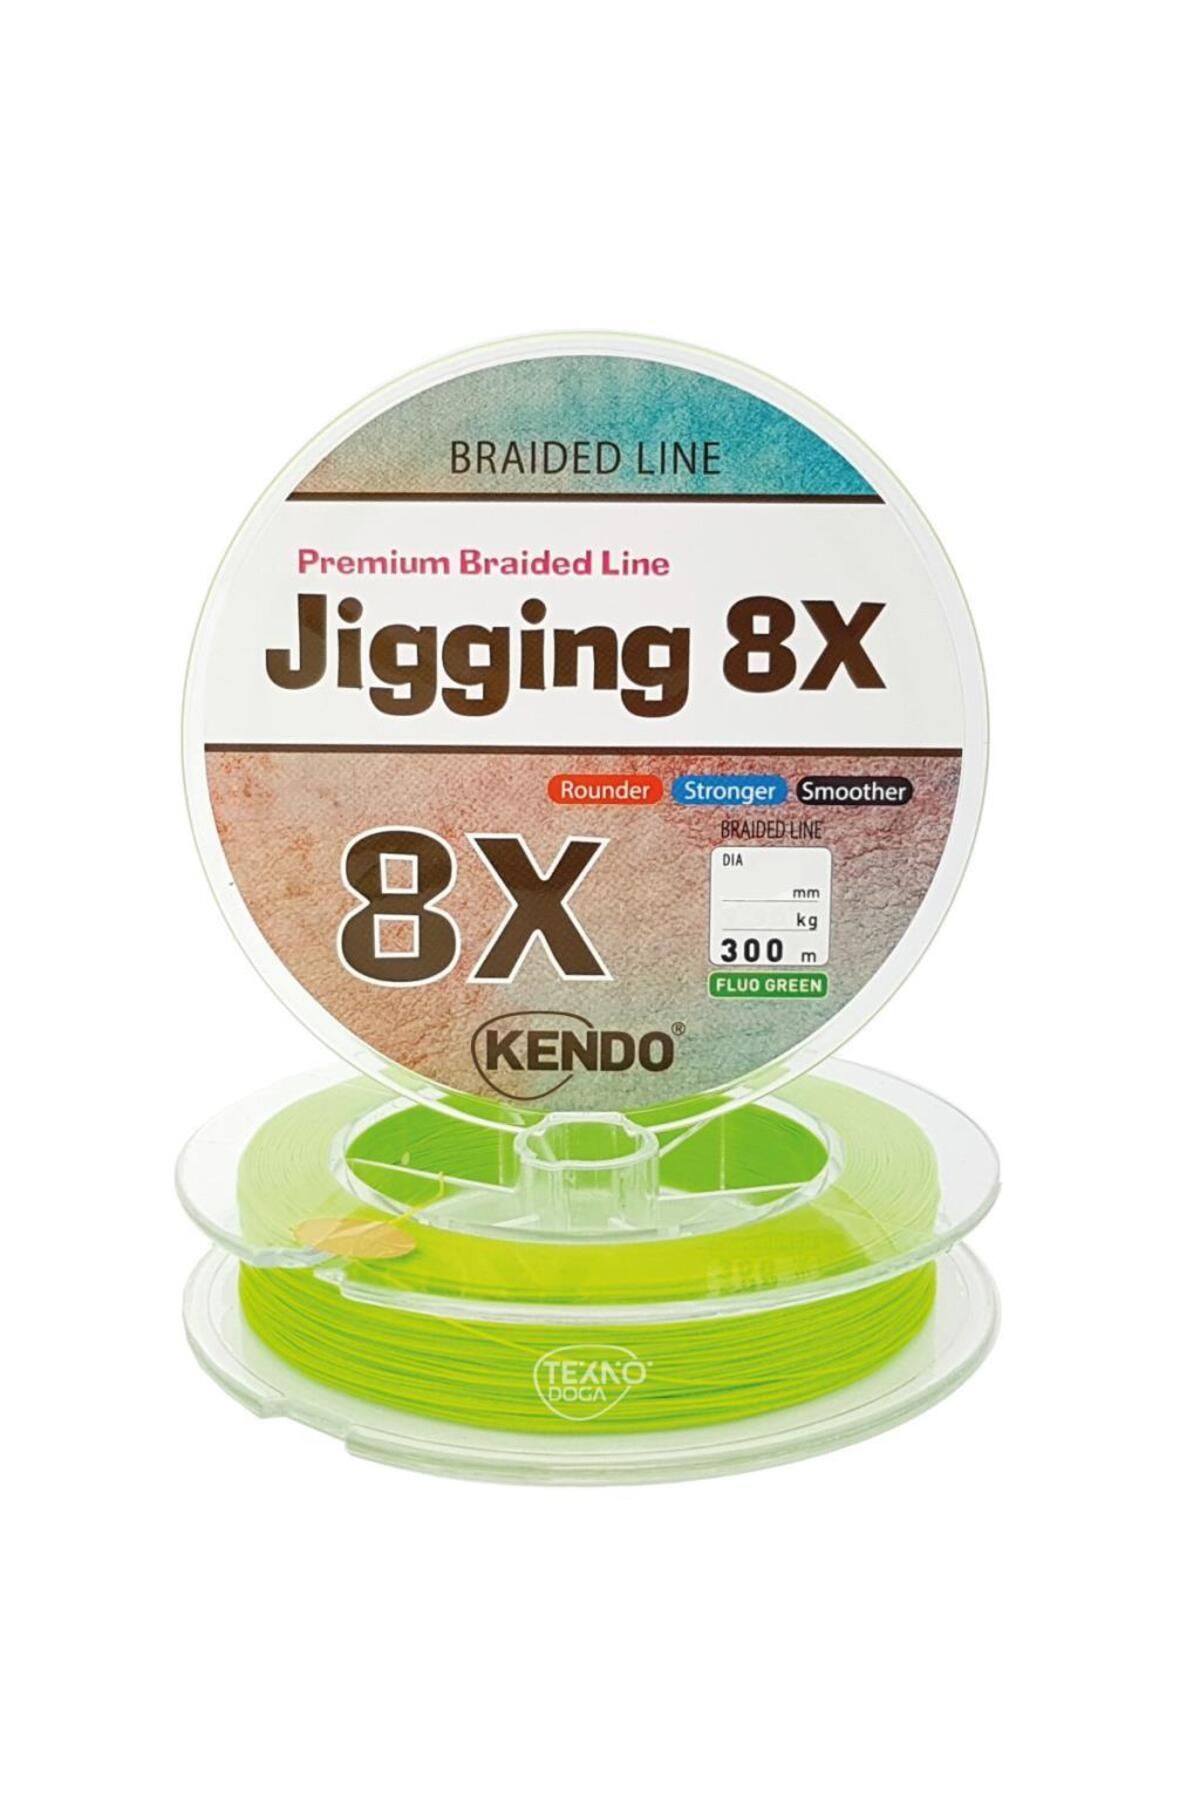 Kendo Jigging 8x Flash ( Fluo Green ) Örgü Ip Olta Misinası 300mt 0.23 Mm